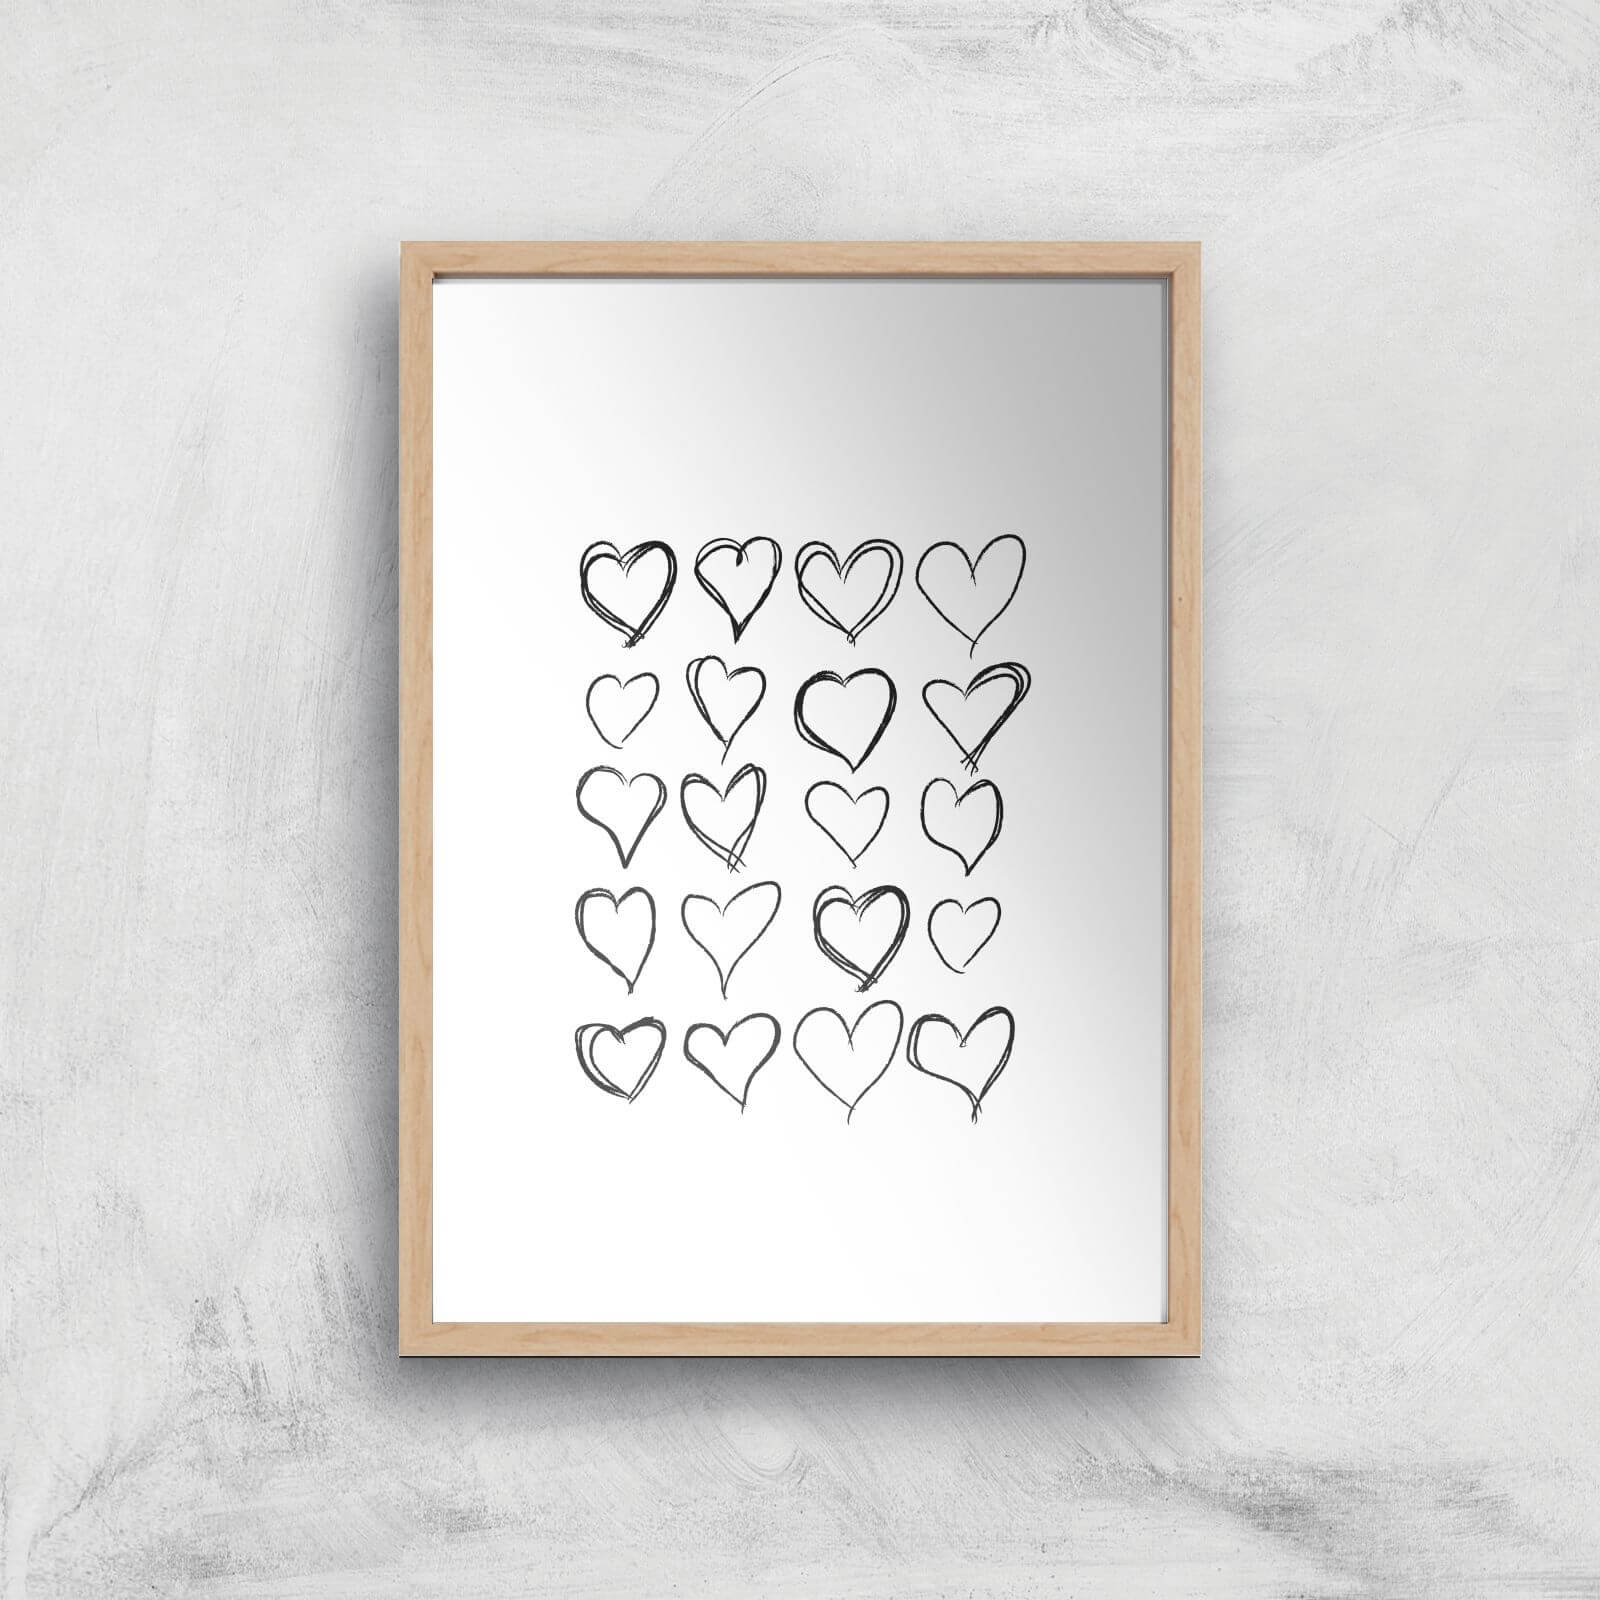 Love Hearts Giclee Art Print - A3 - Wooden Frame